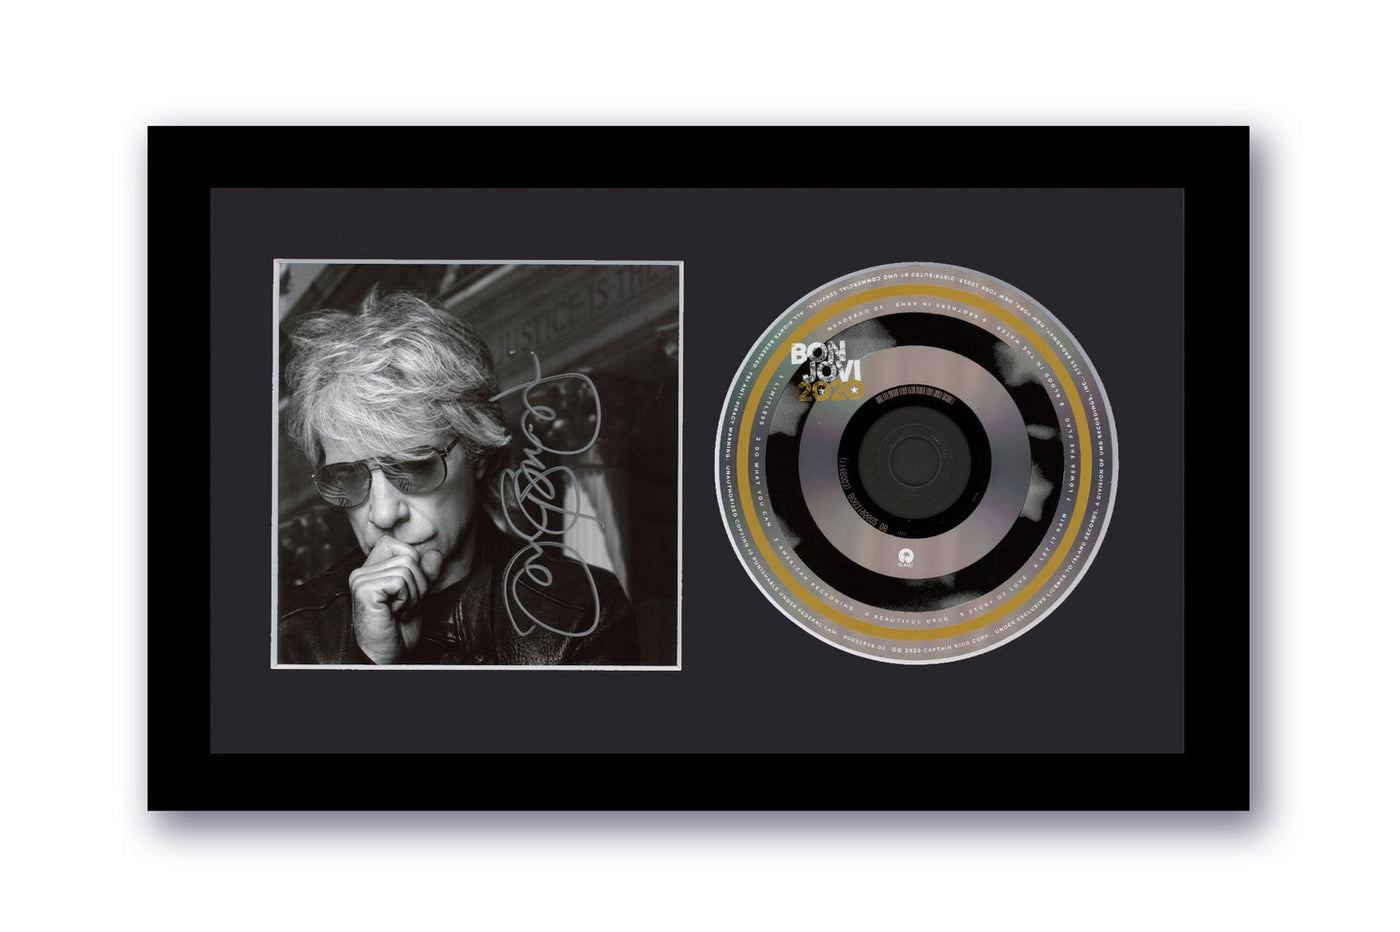 Jon Bon Jovi Autographed Signed 7x12 Framed CD 20/20 ACOA 2